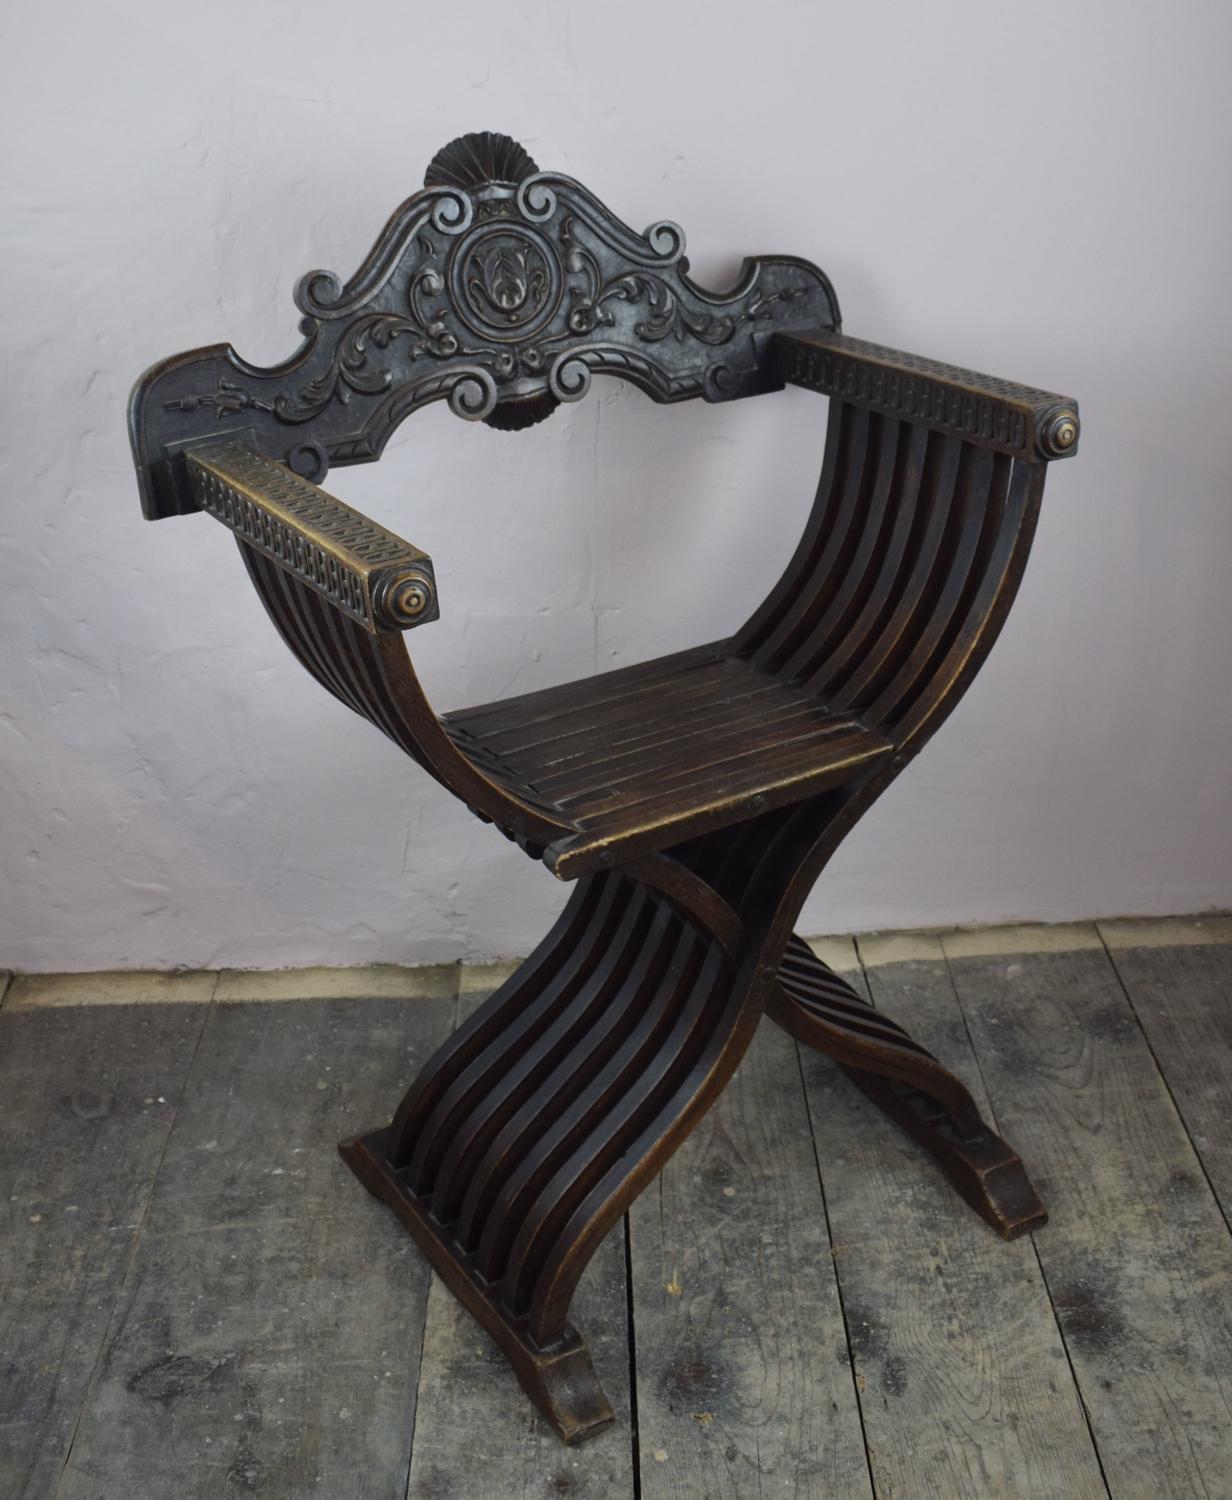 Italian Renaissance Revival Savonarola Chair